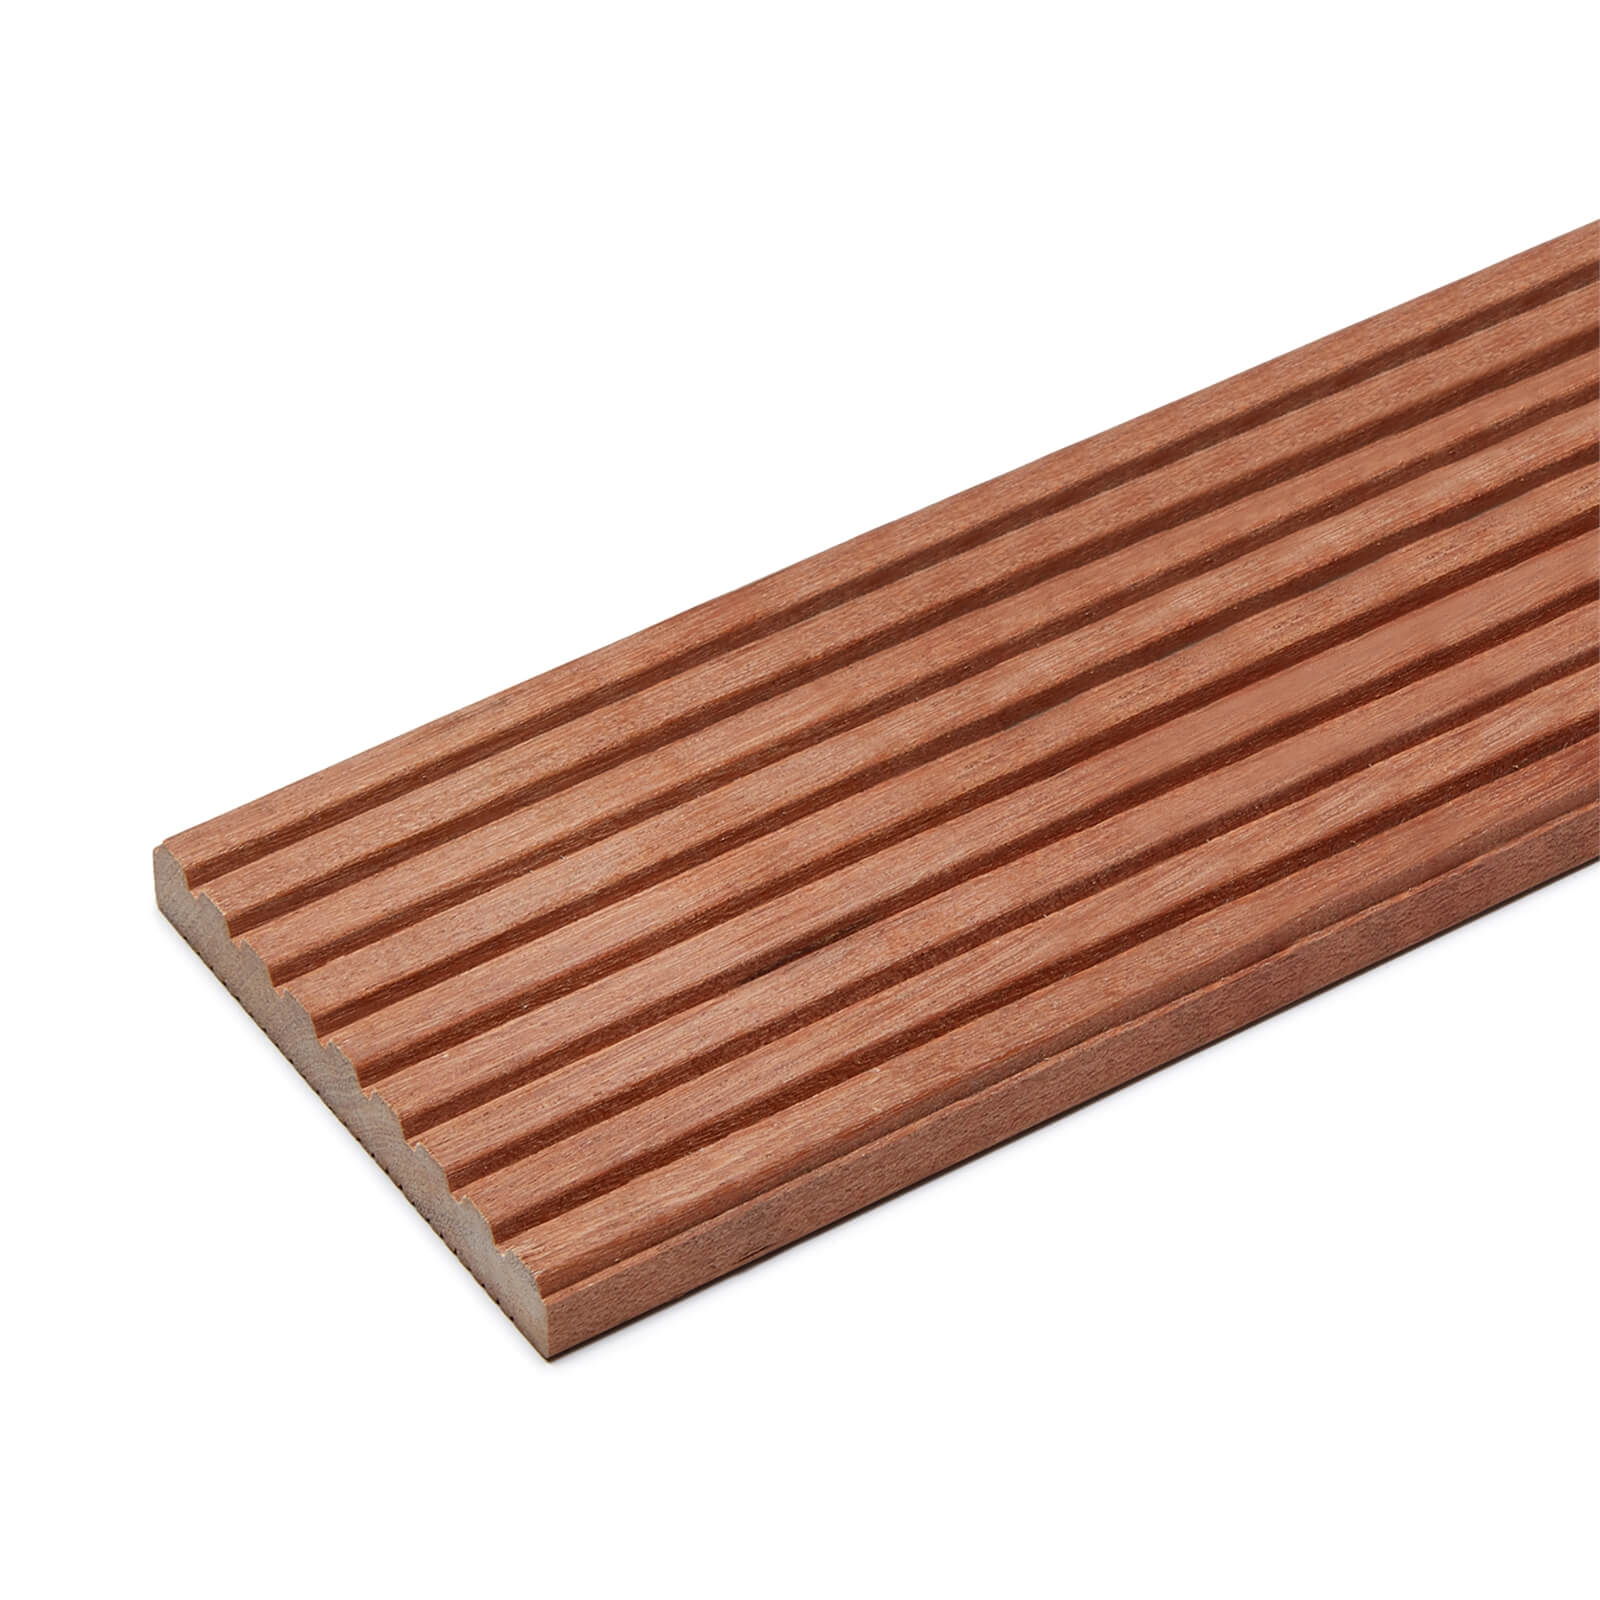 Hardwood Deckboards Yellow Balau (21x145mm) (Sold in 1m2 = 6.89 linear metre per pack)